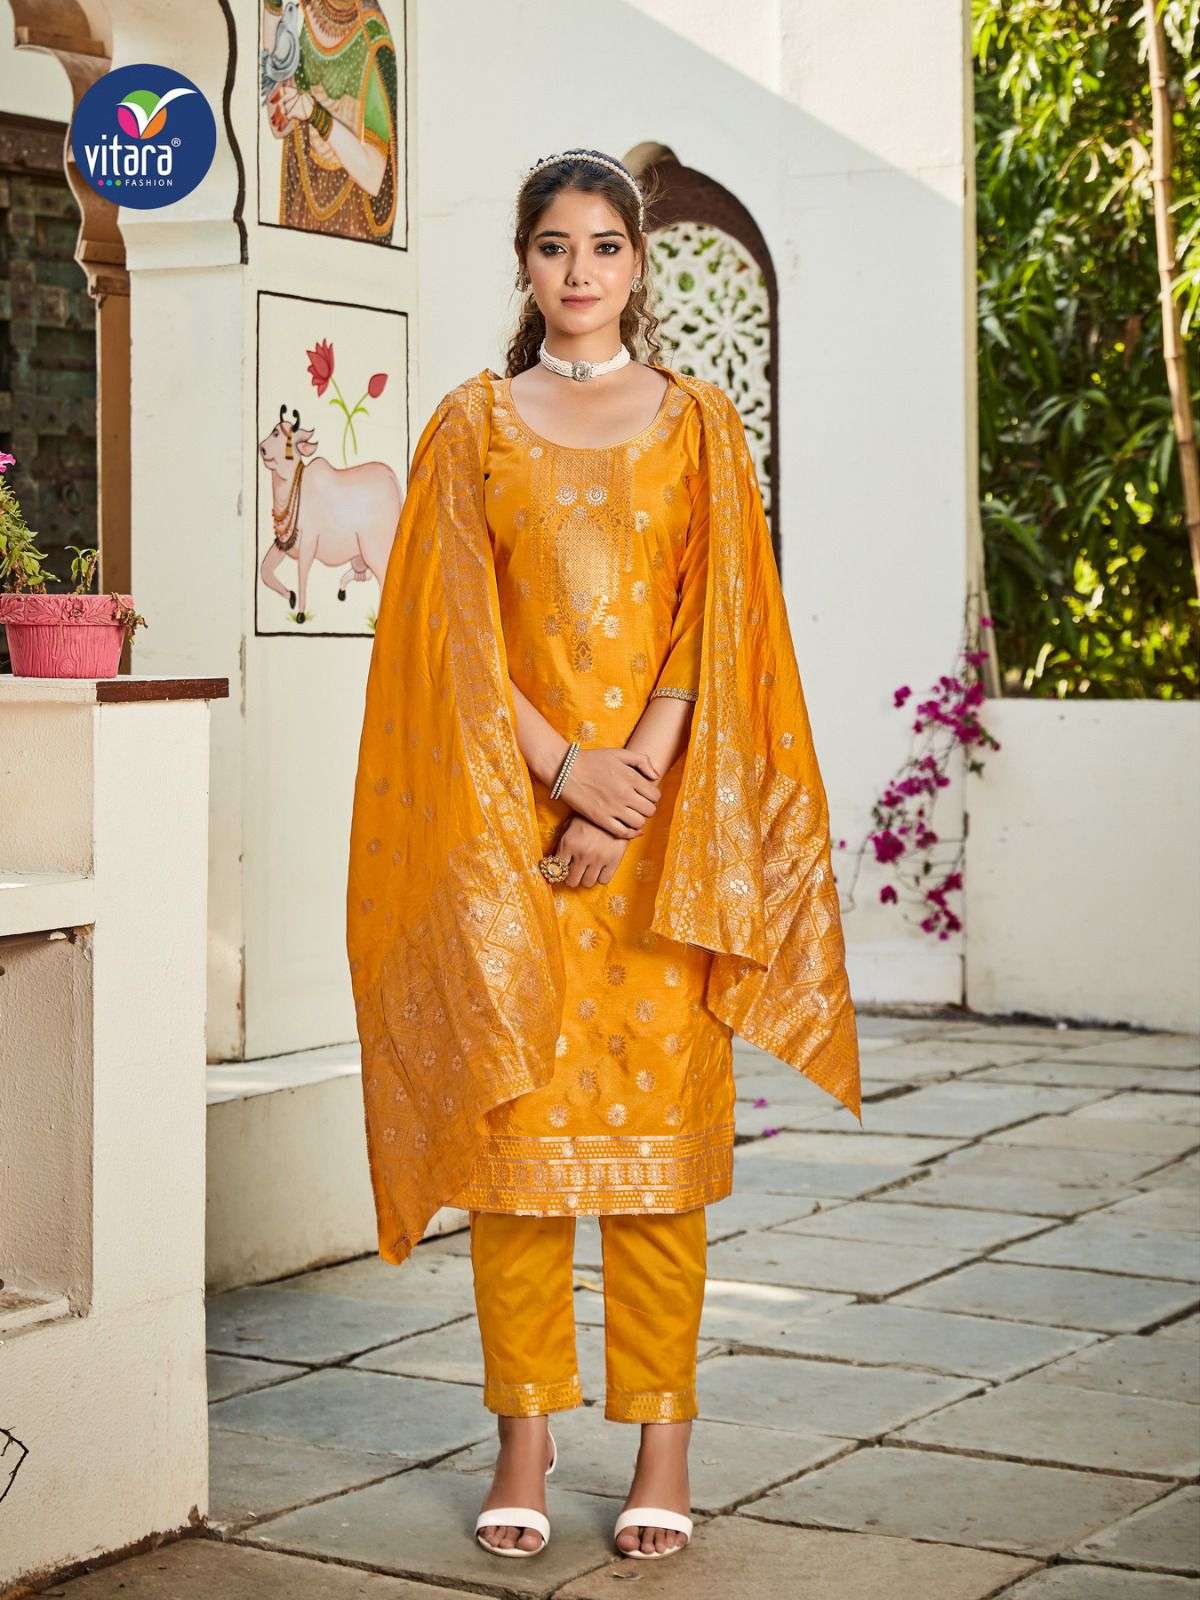 Sai Dhara NxVitara Mastani 2 Party Wear Kurti With Bottom Dupatta Collection Wholesale Rate in Saidharanx 